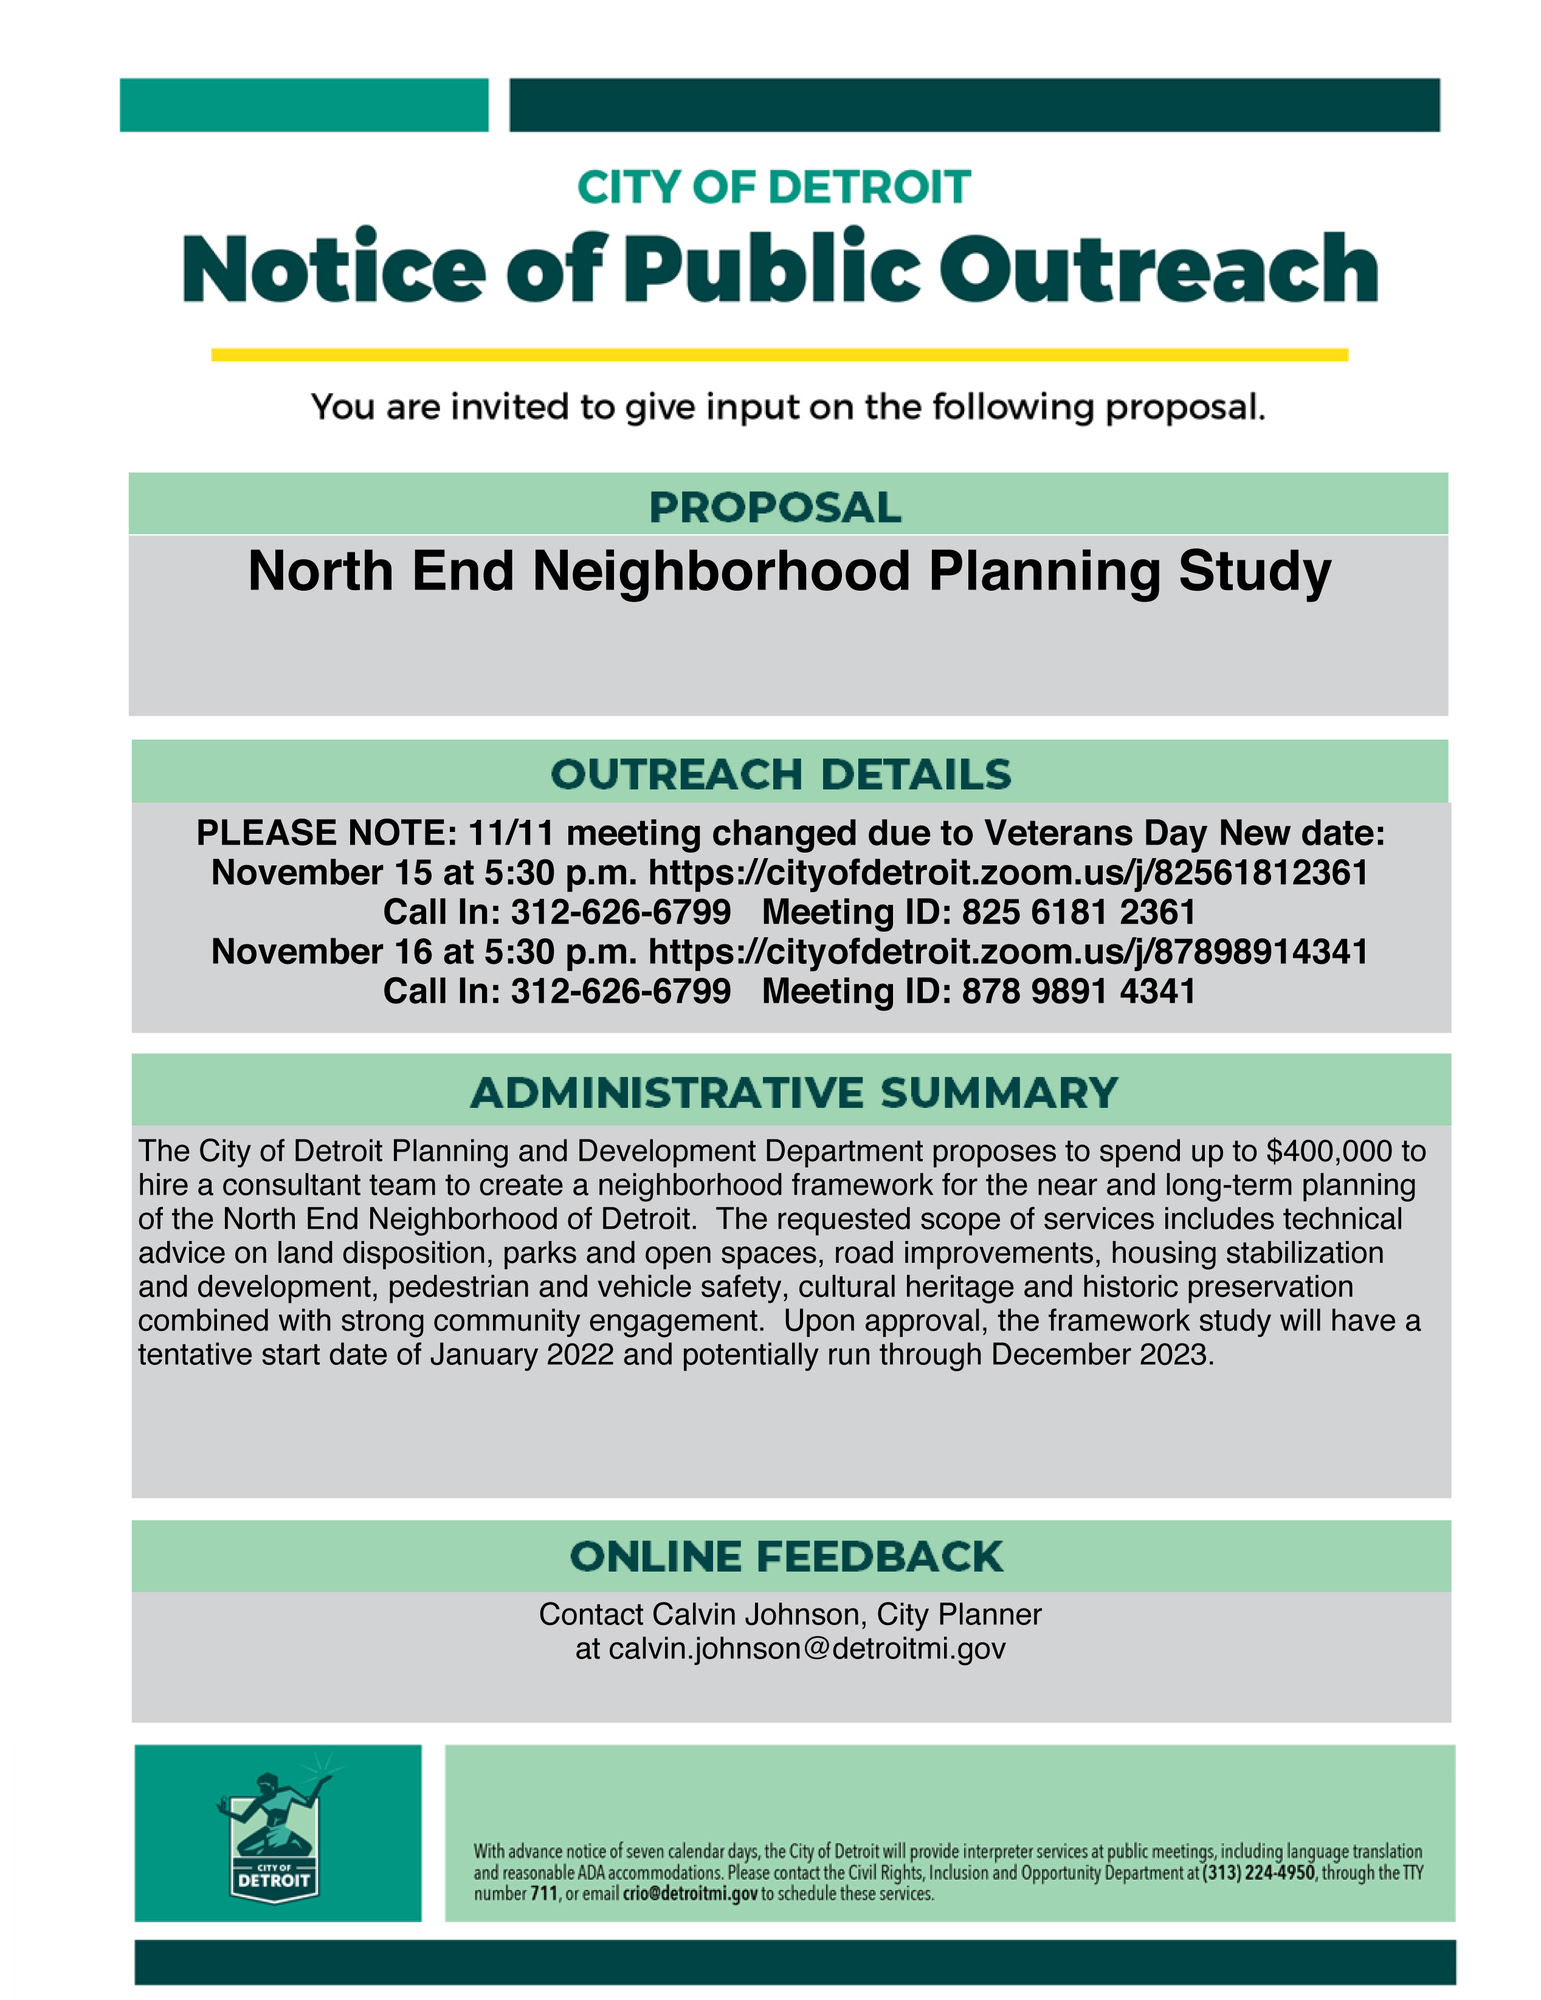 North End Neighborhood Planning Study - Nov. 15 & 16